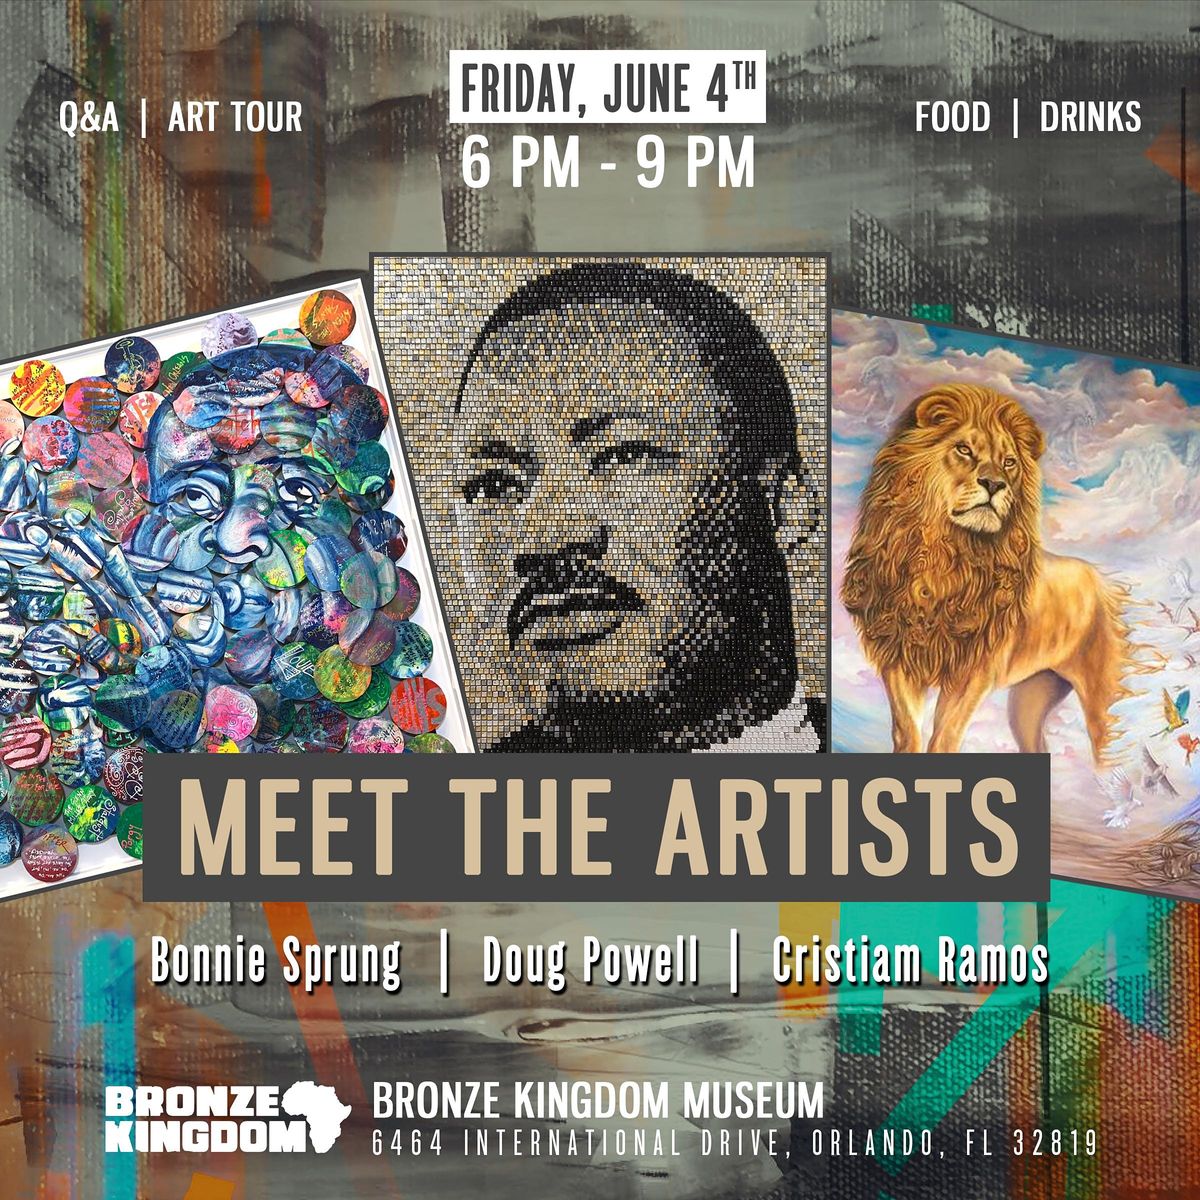 MEET THE ARTISTS: Bonnie Sprung, Doug Powell, & Cristiam Ramos